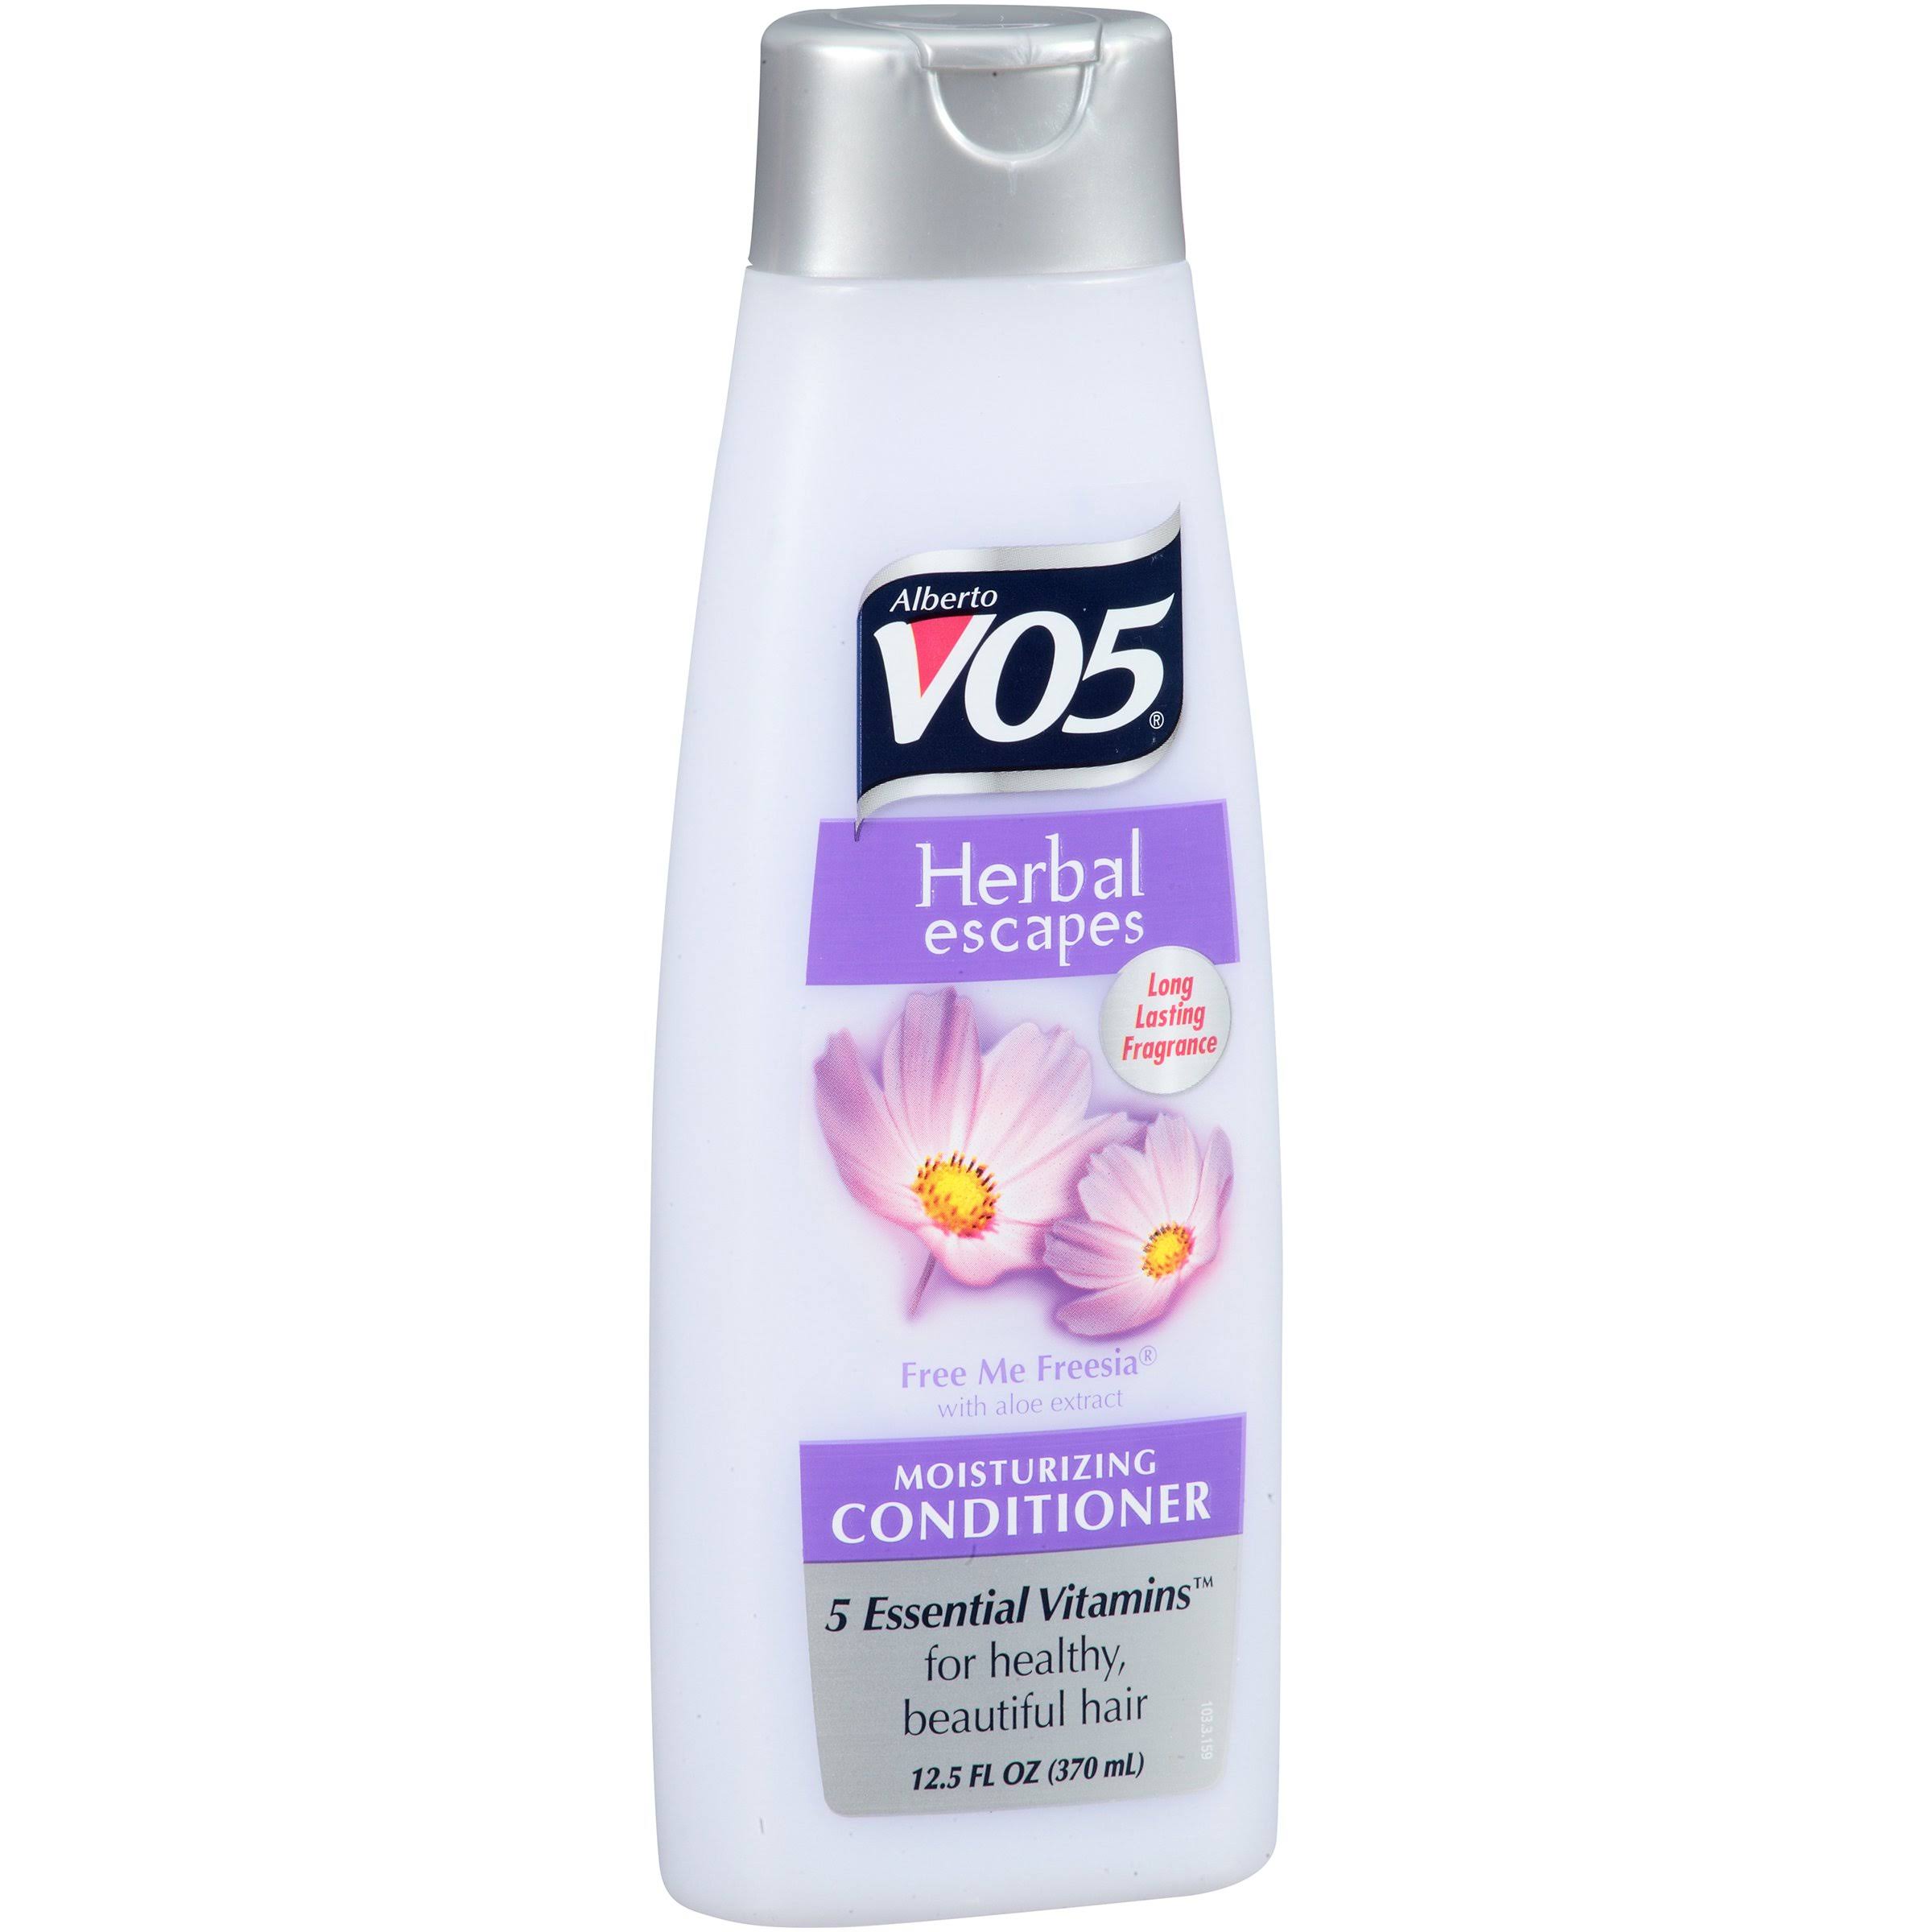 VO5 Herbal Escapes Moisturizing Conditioner - Free Me Freesia, 12.5oz